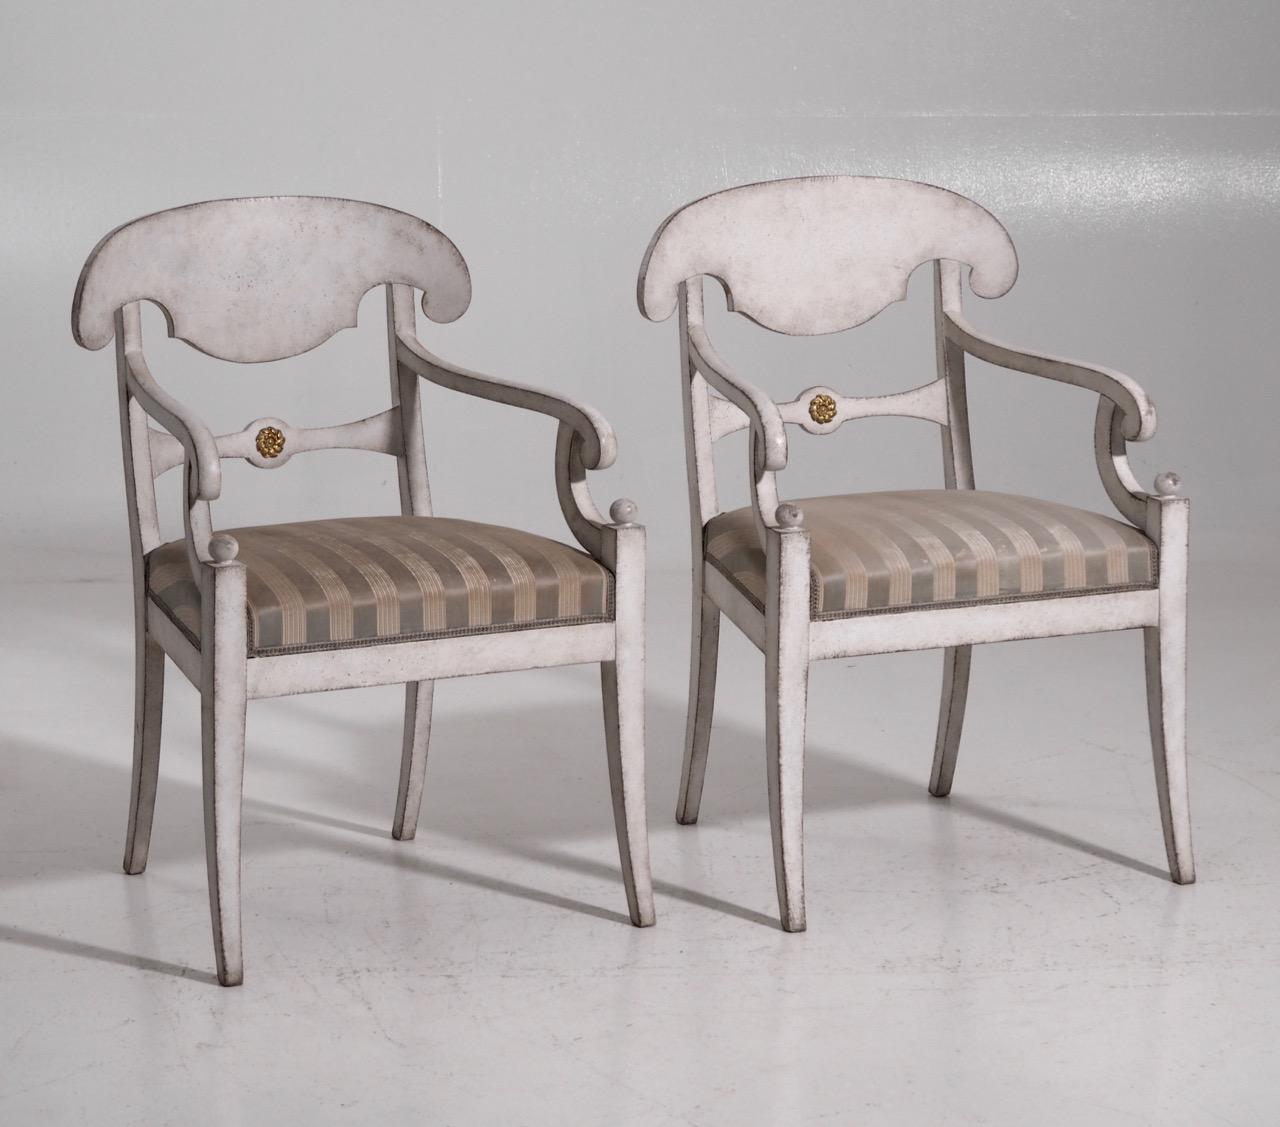 Pair of Swedish armchairs with “Karl Johan” back, 19th century.